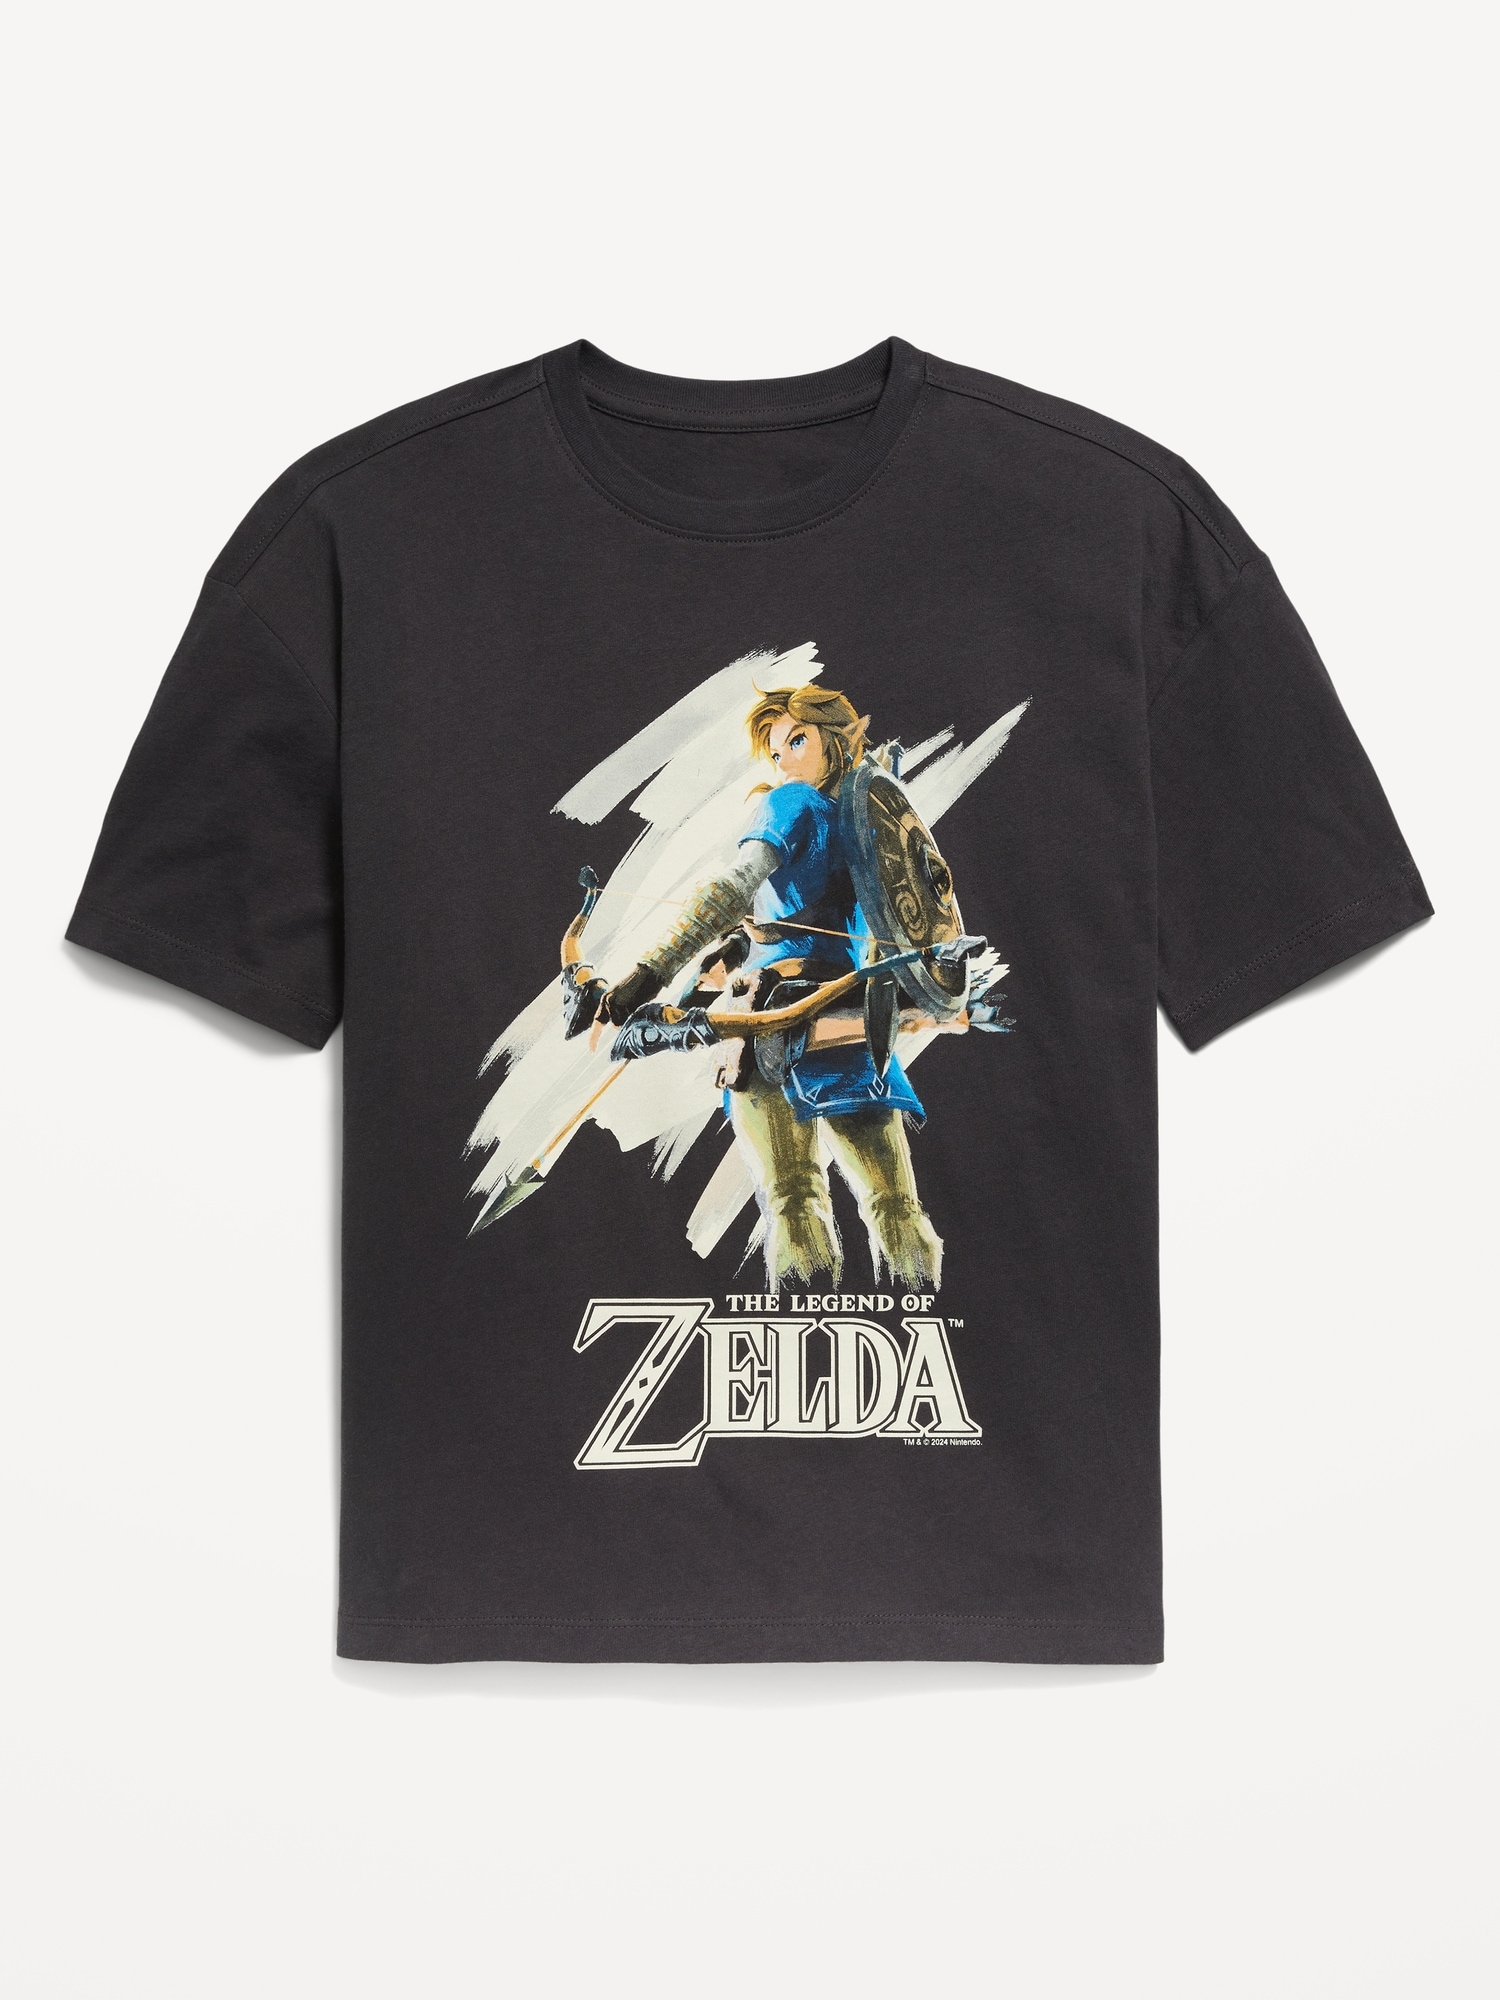 The Legend of Zelda™ Oversized Gender-Neutral Graphic T-Shirt for Kids